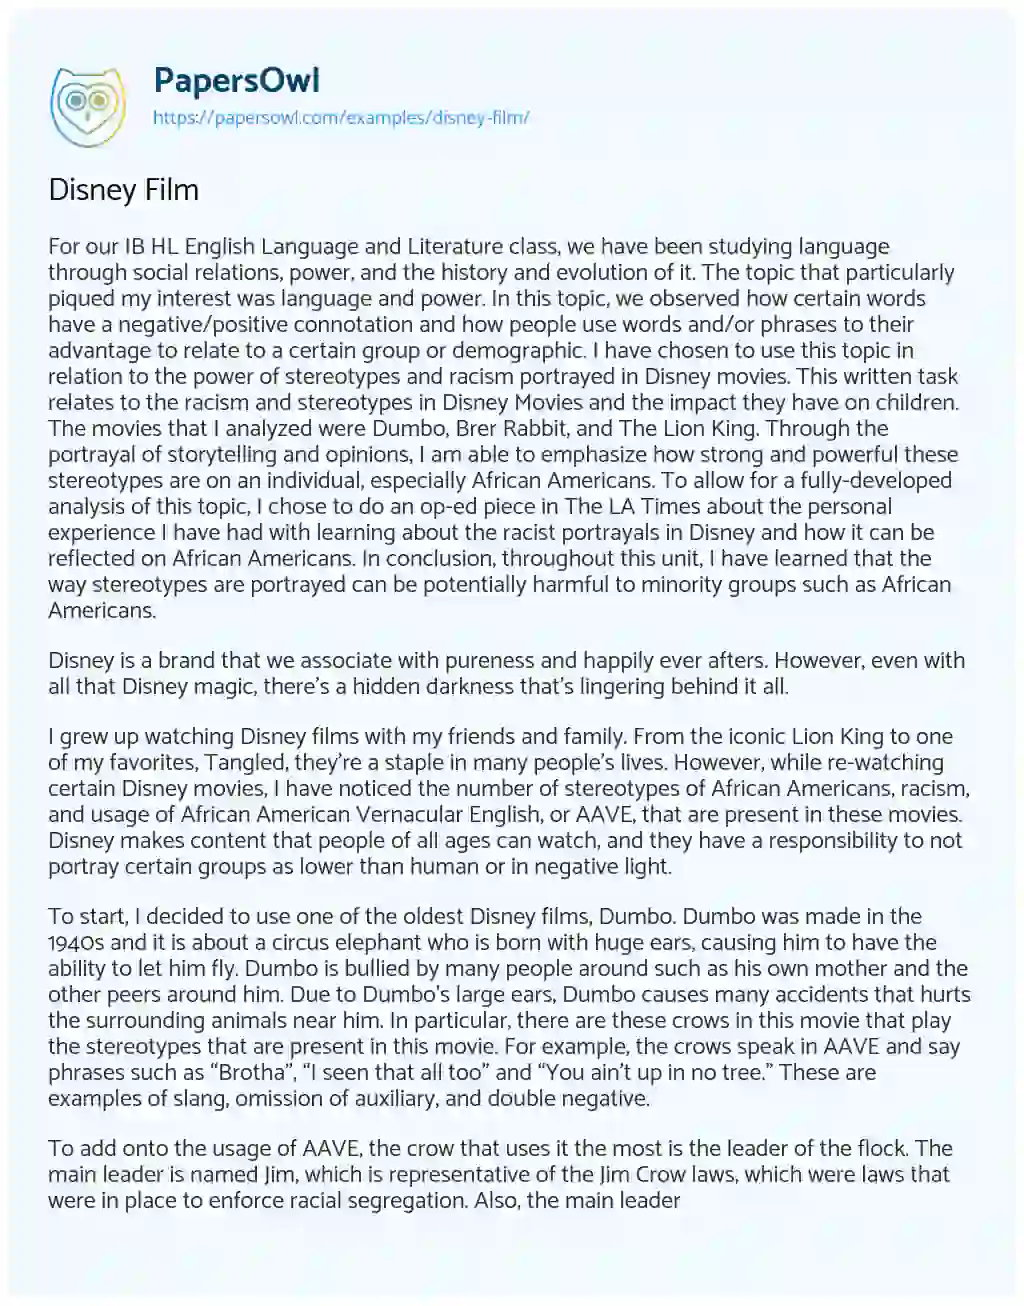 Essay on Disney Film